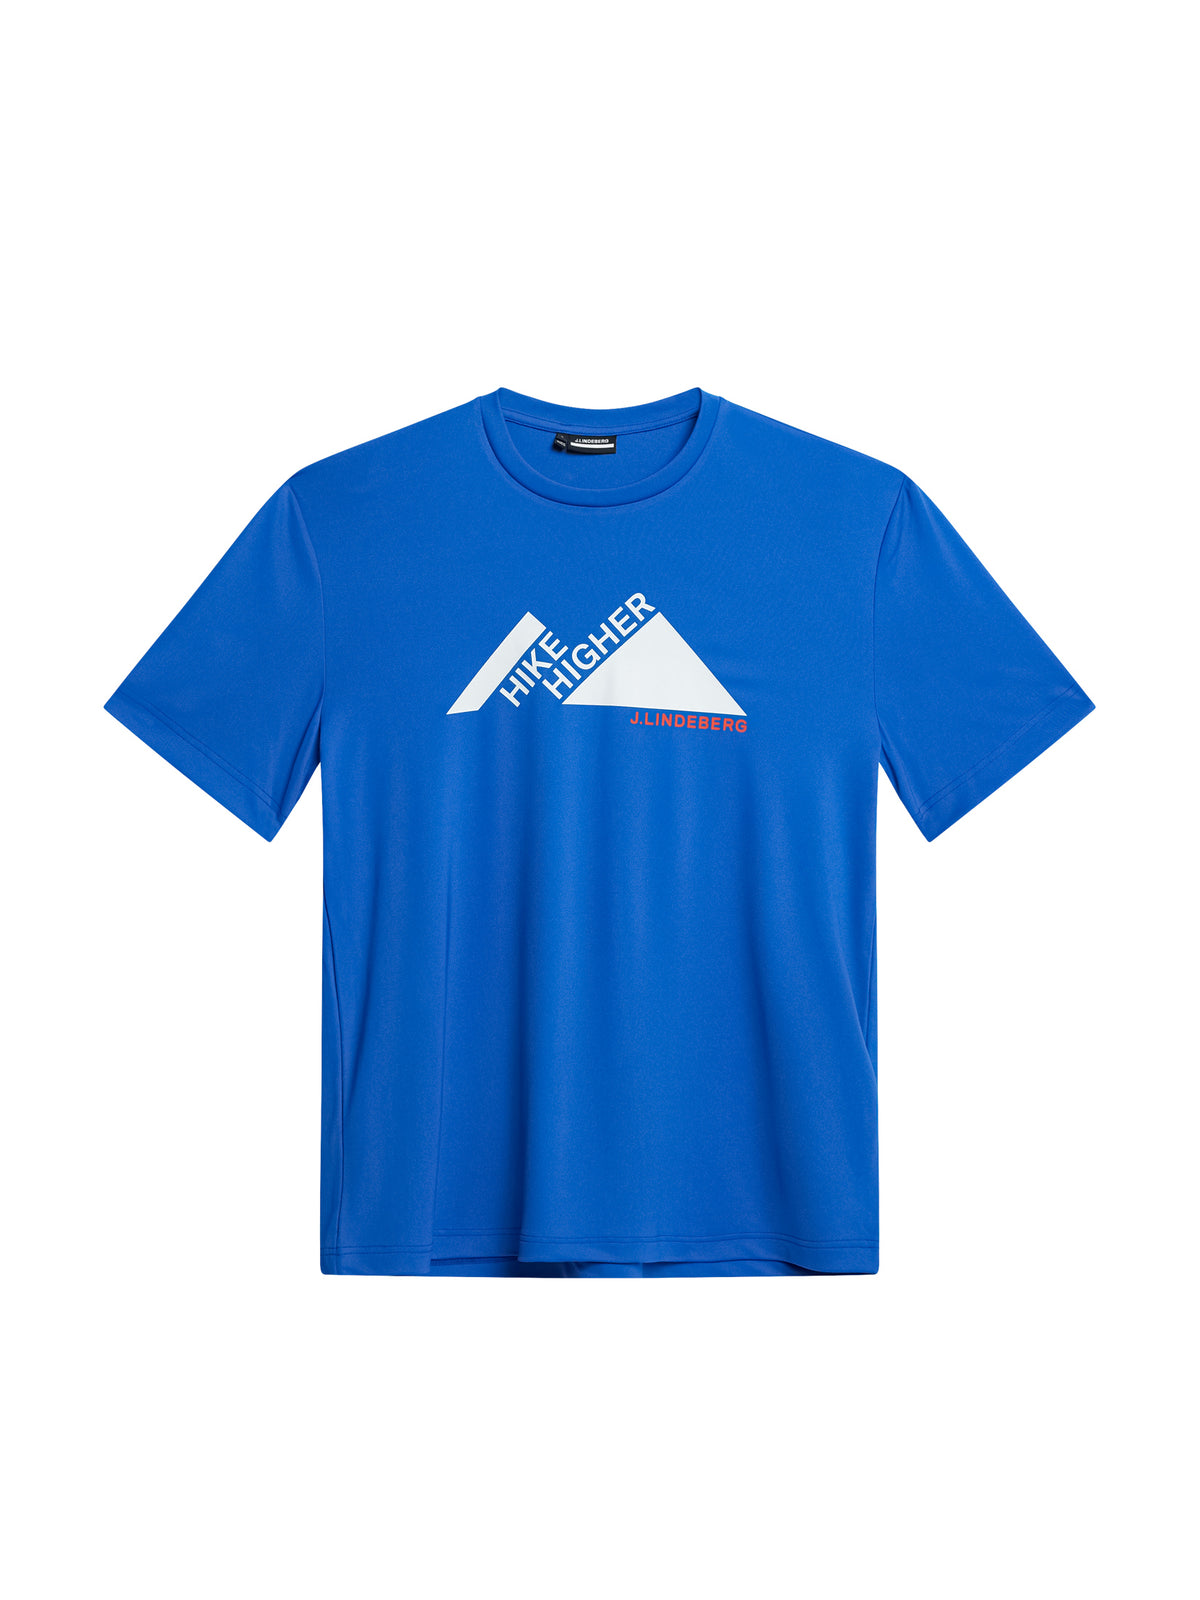 Andreas T-shirt / Nautical Blue